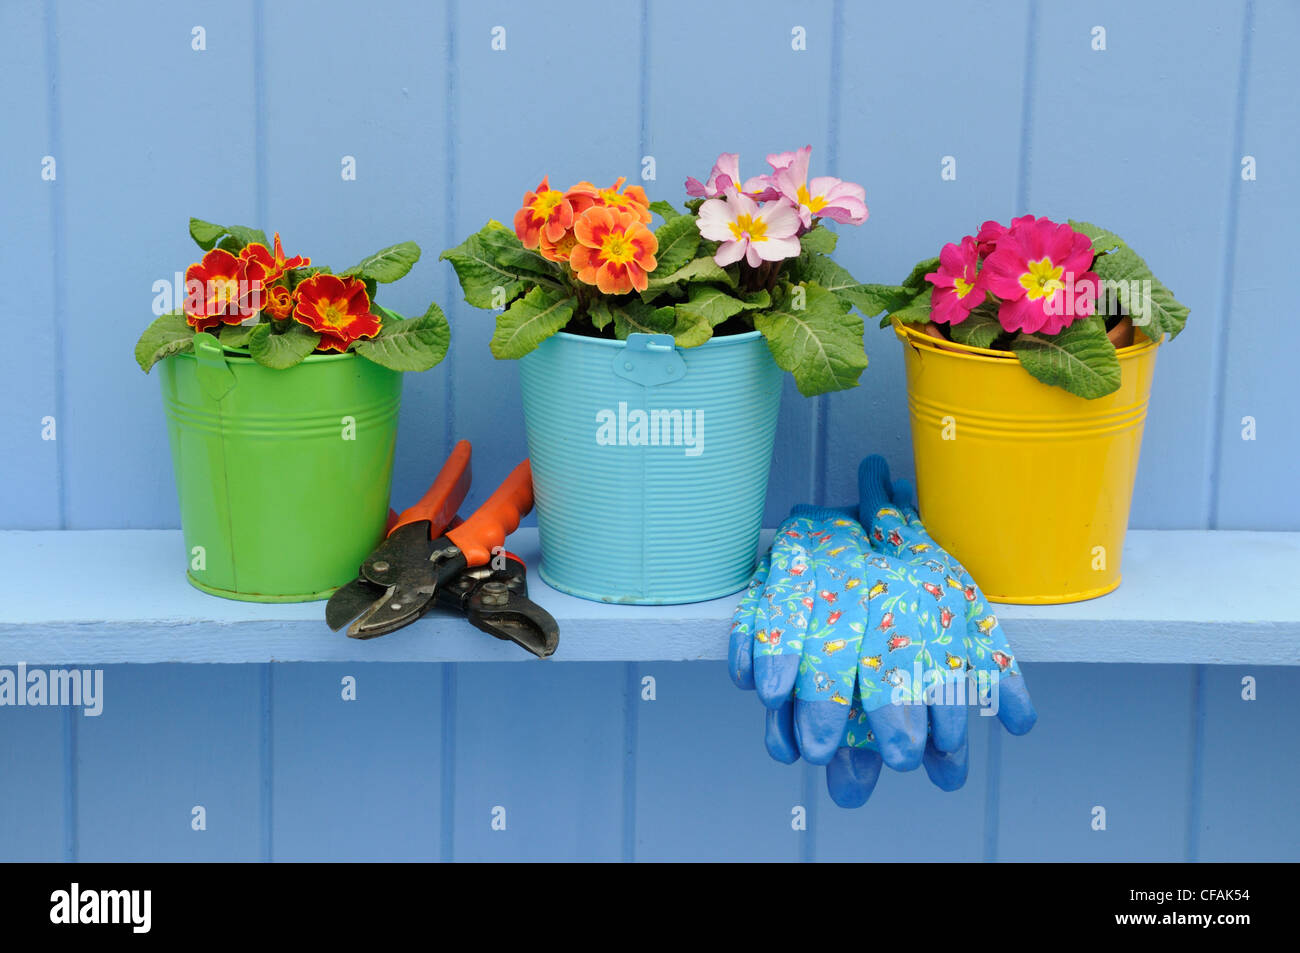 Rustic springtime garden scene with Primroses in colourful buckets on blue shelf. Stock Photo